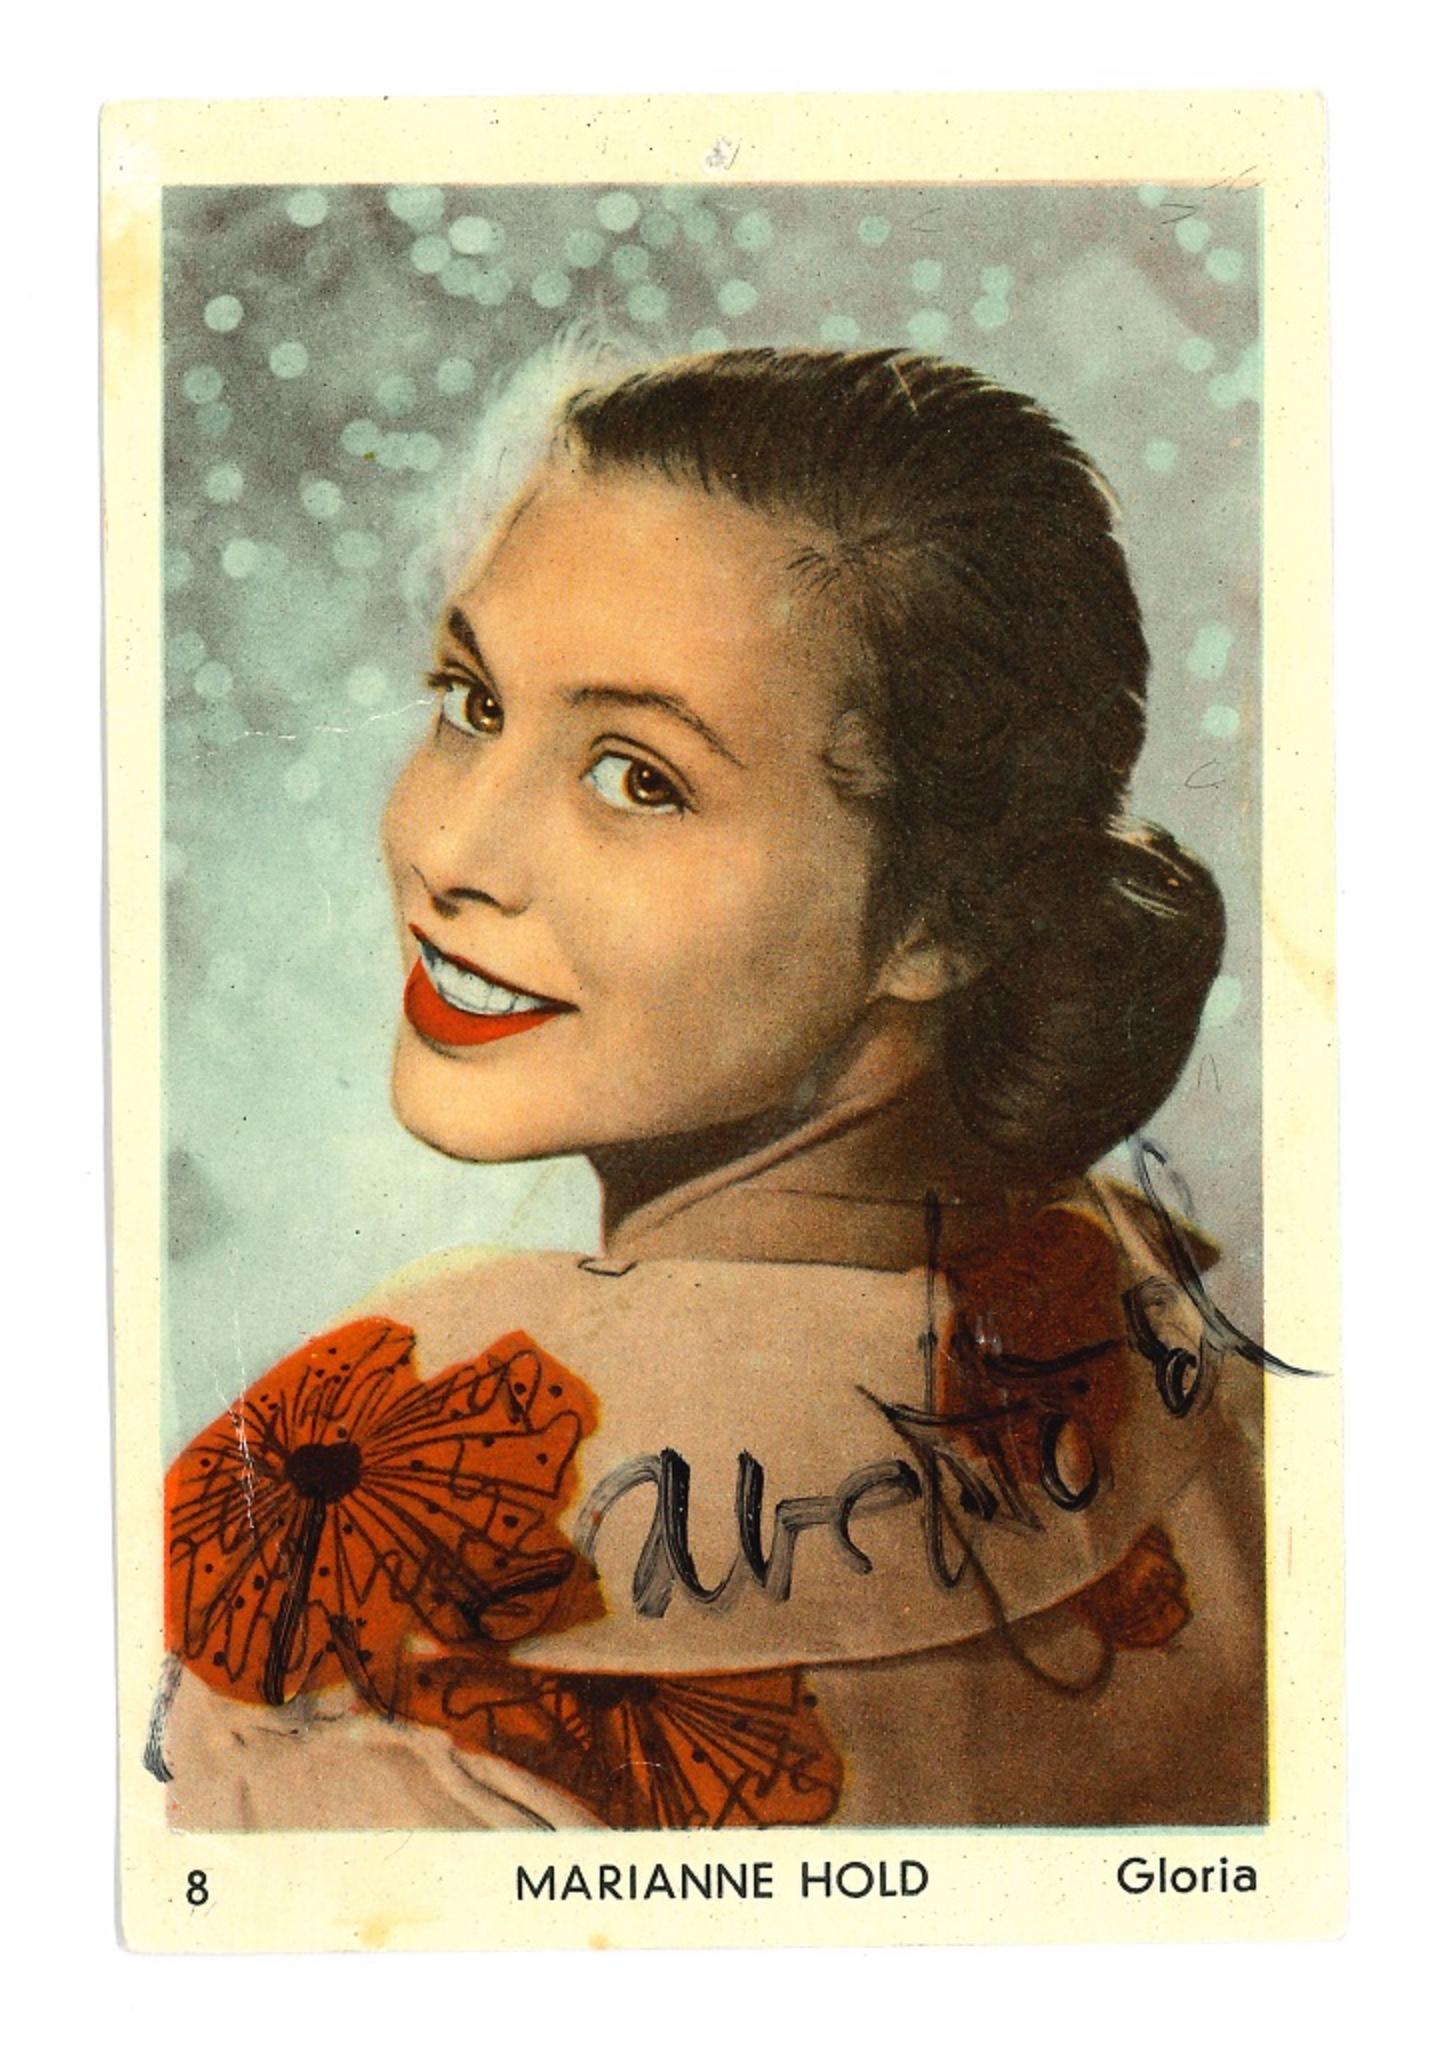 Unknown Portrait Photograph - Autographed Portrait of Marianne Hold - 1960s